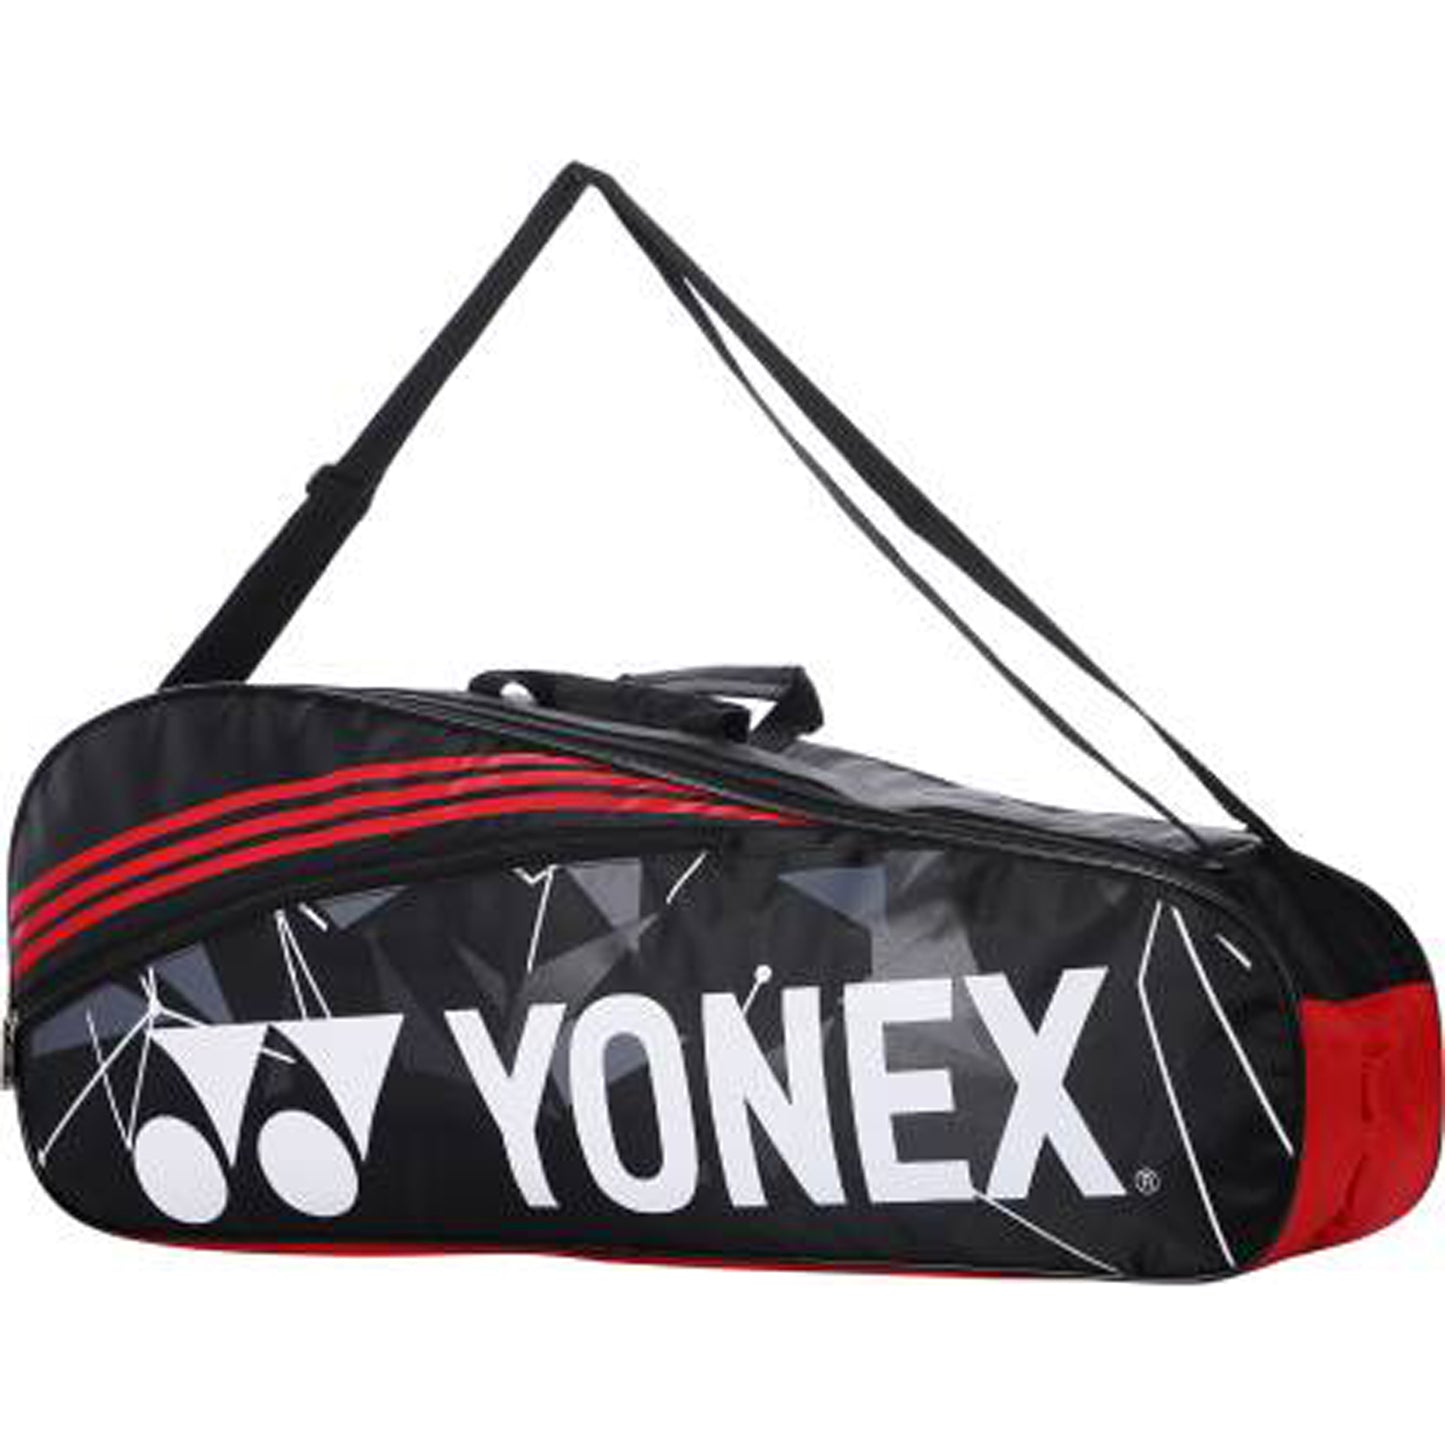 Yonex SUNR 2225 Badminton Kitbag - Best Price online Prokicksports.com